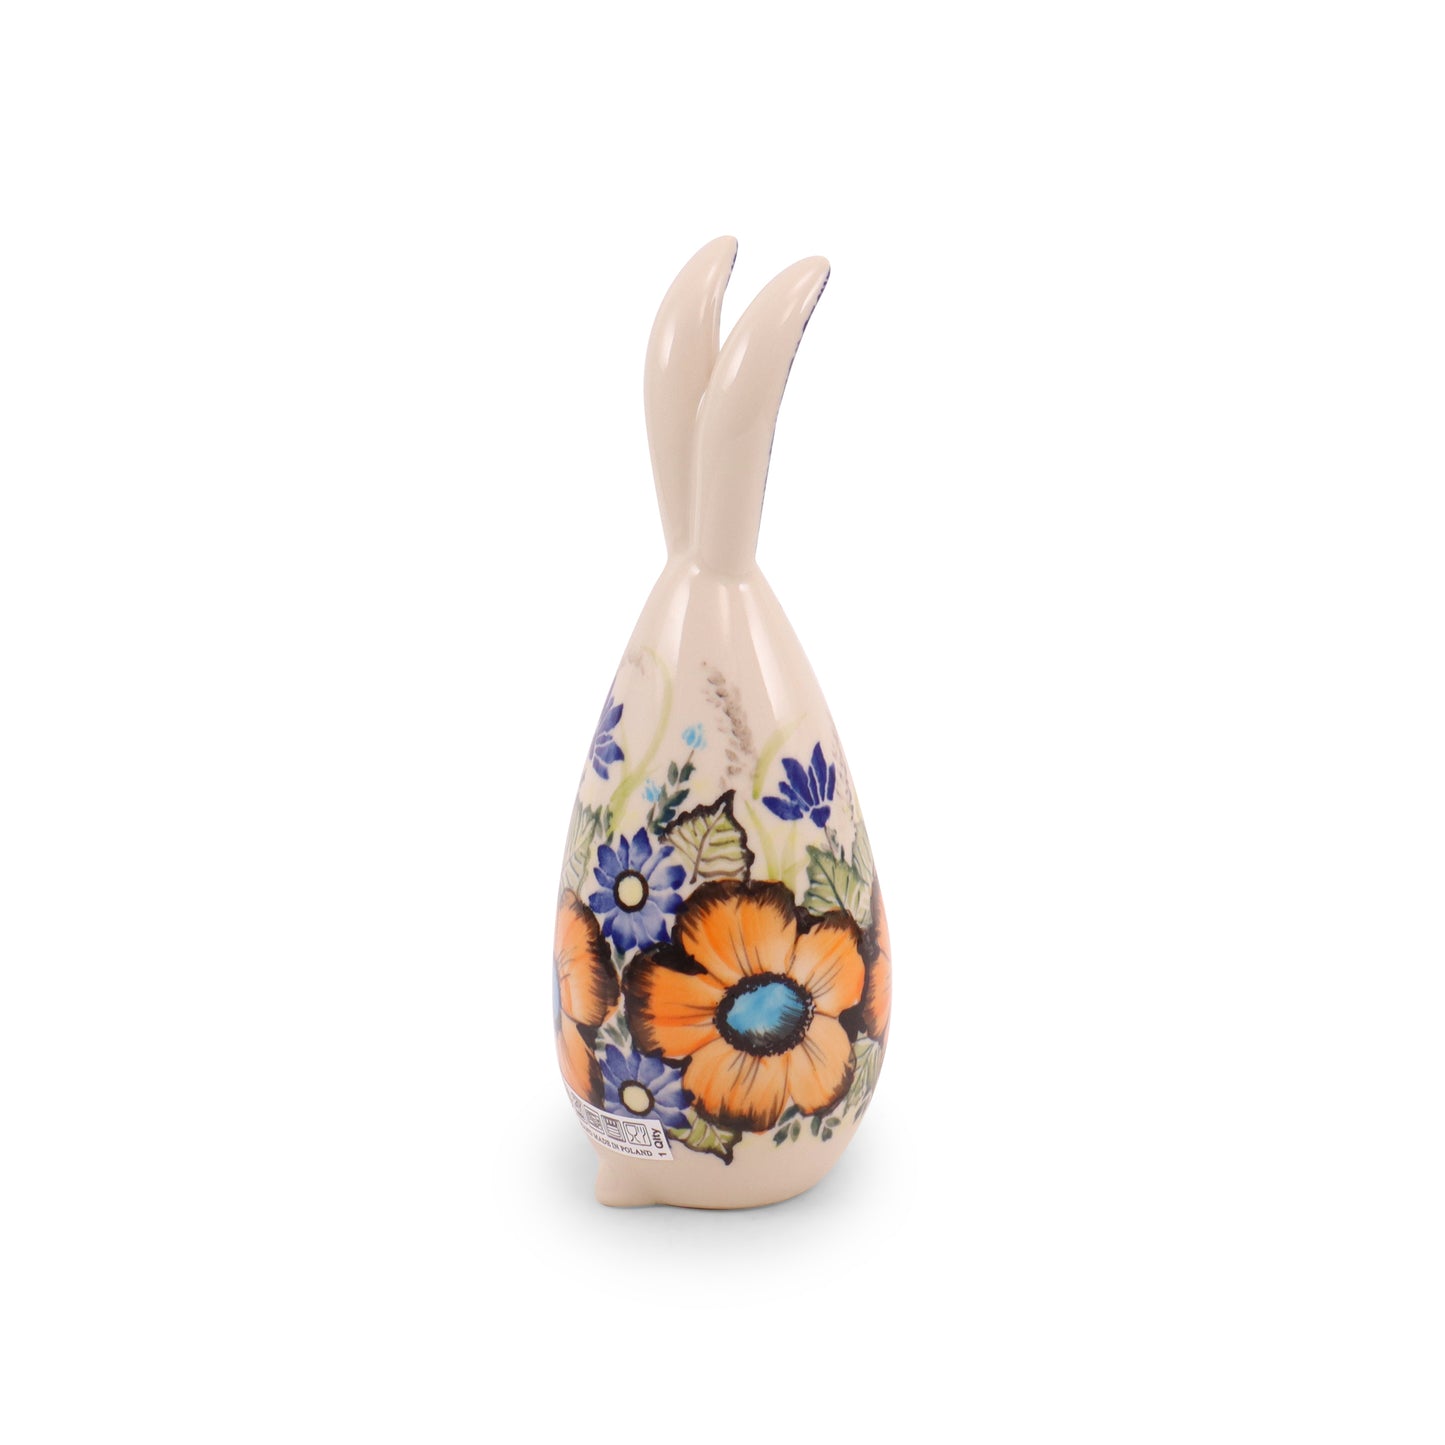 9" Bunny Figurine. Pattern: White Spring